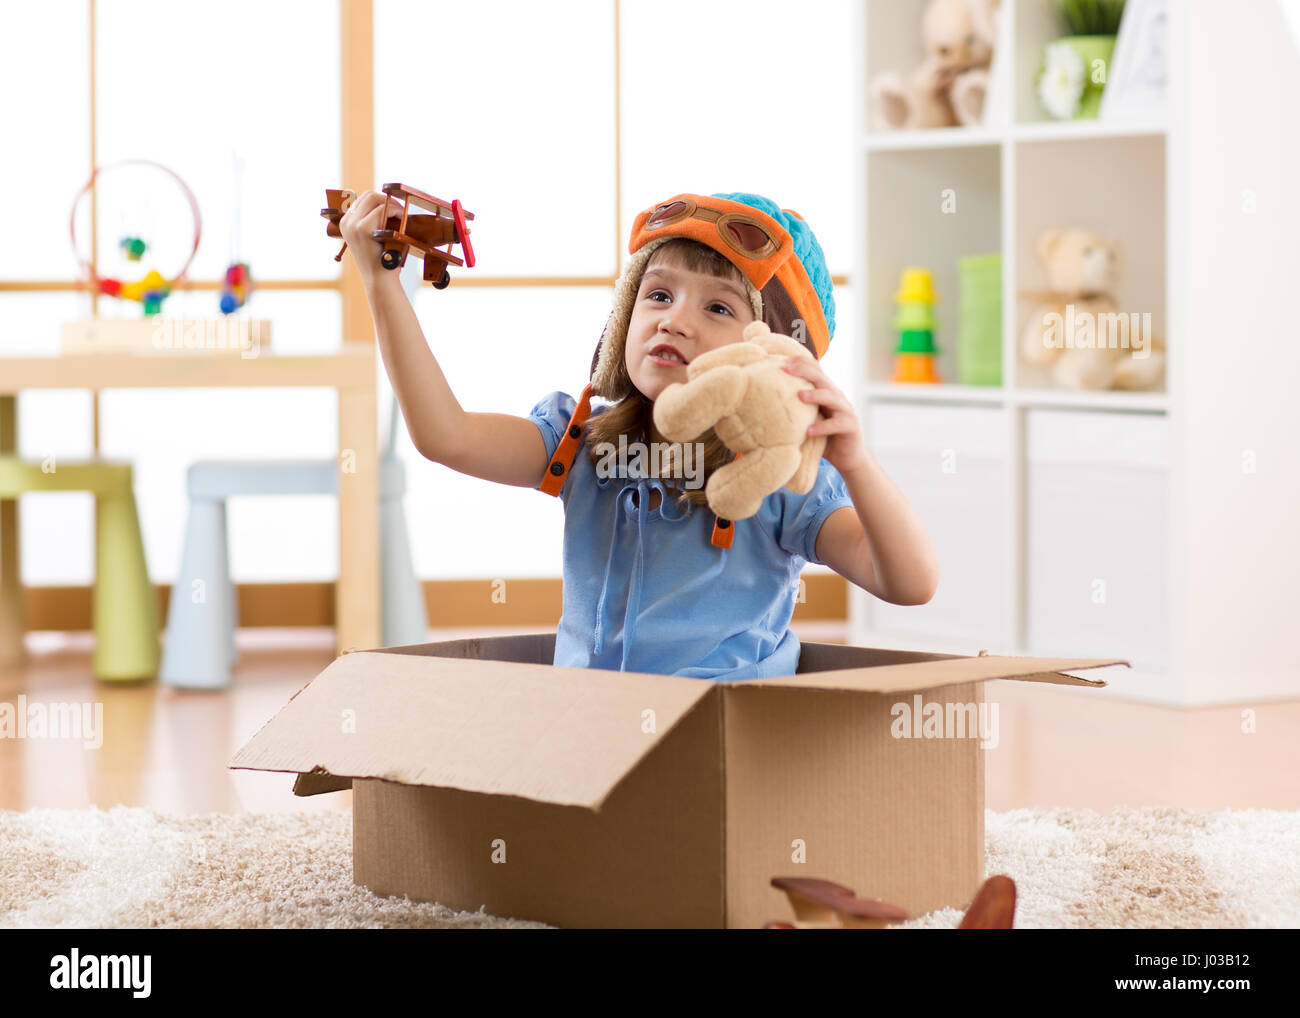 Kid child pilot flying a cardboard box Stock Photo